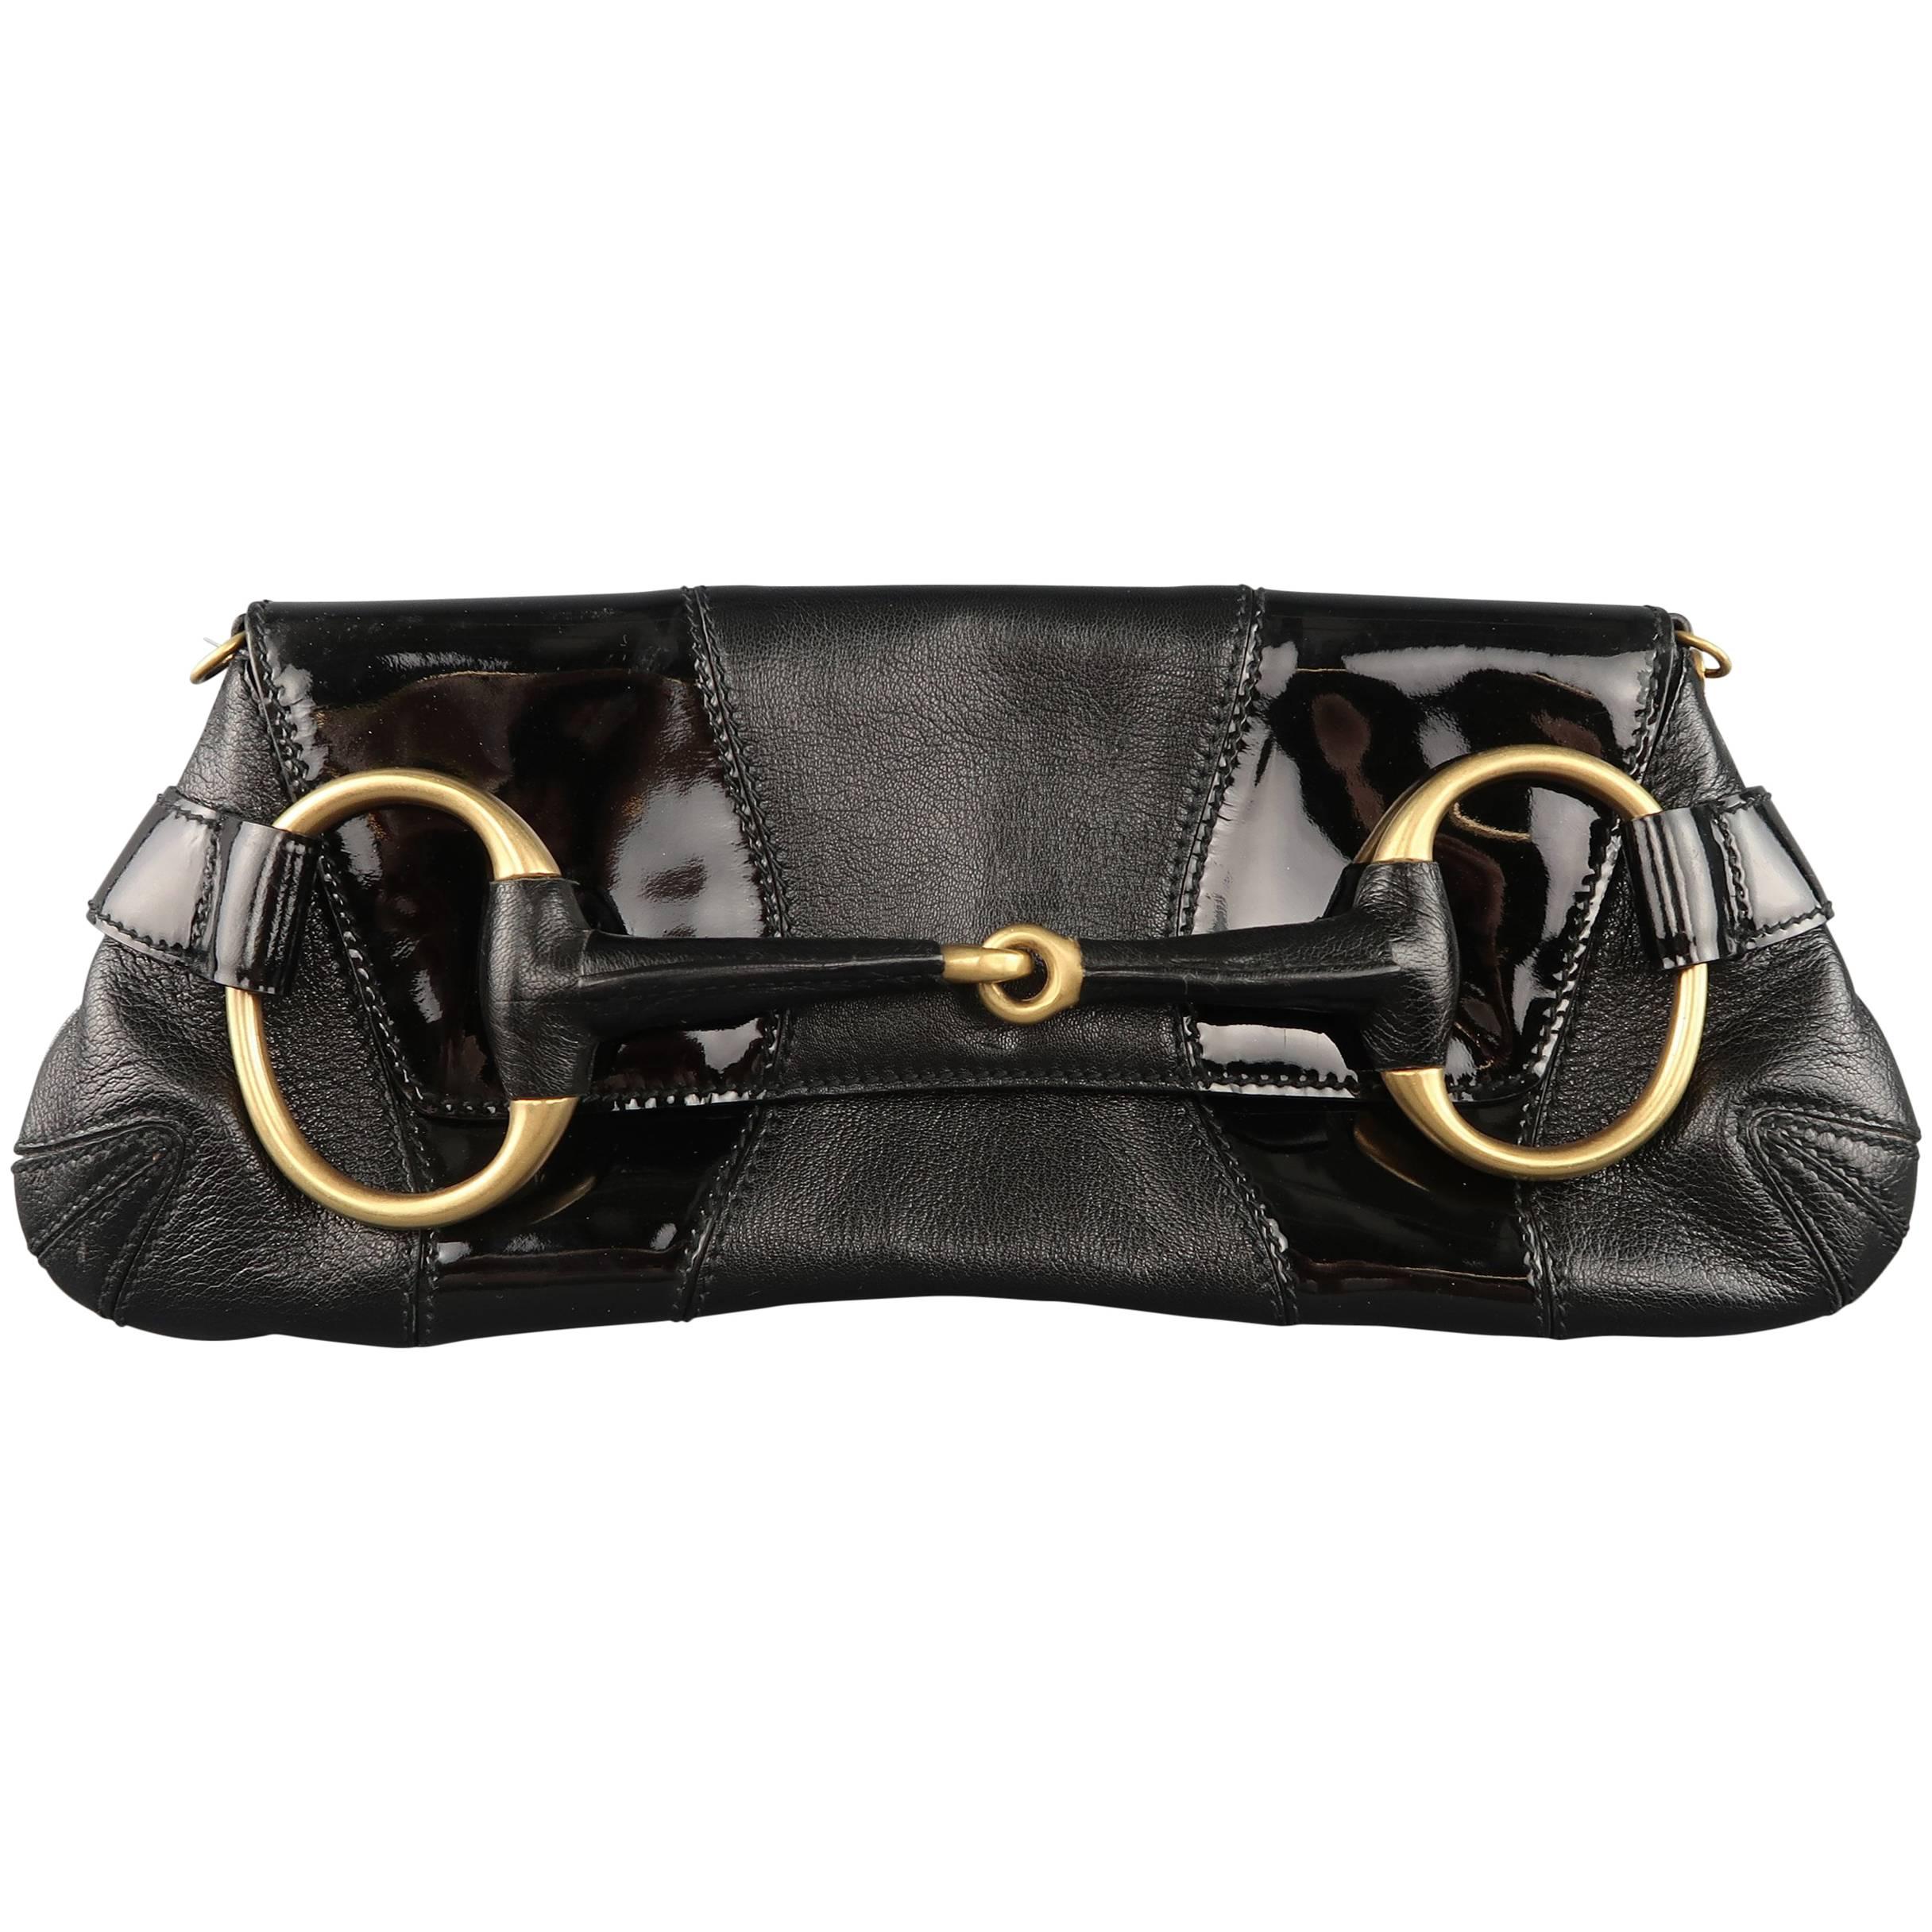 GUCCI Black Patent Leather Panel Gold Horsebit Clutch Handbag